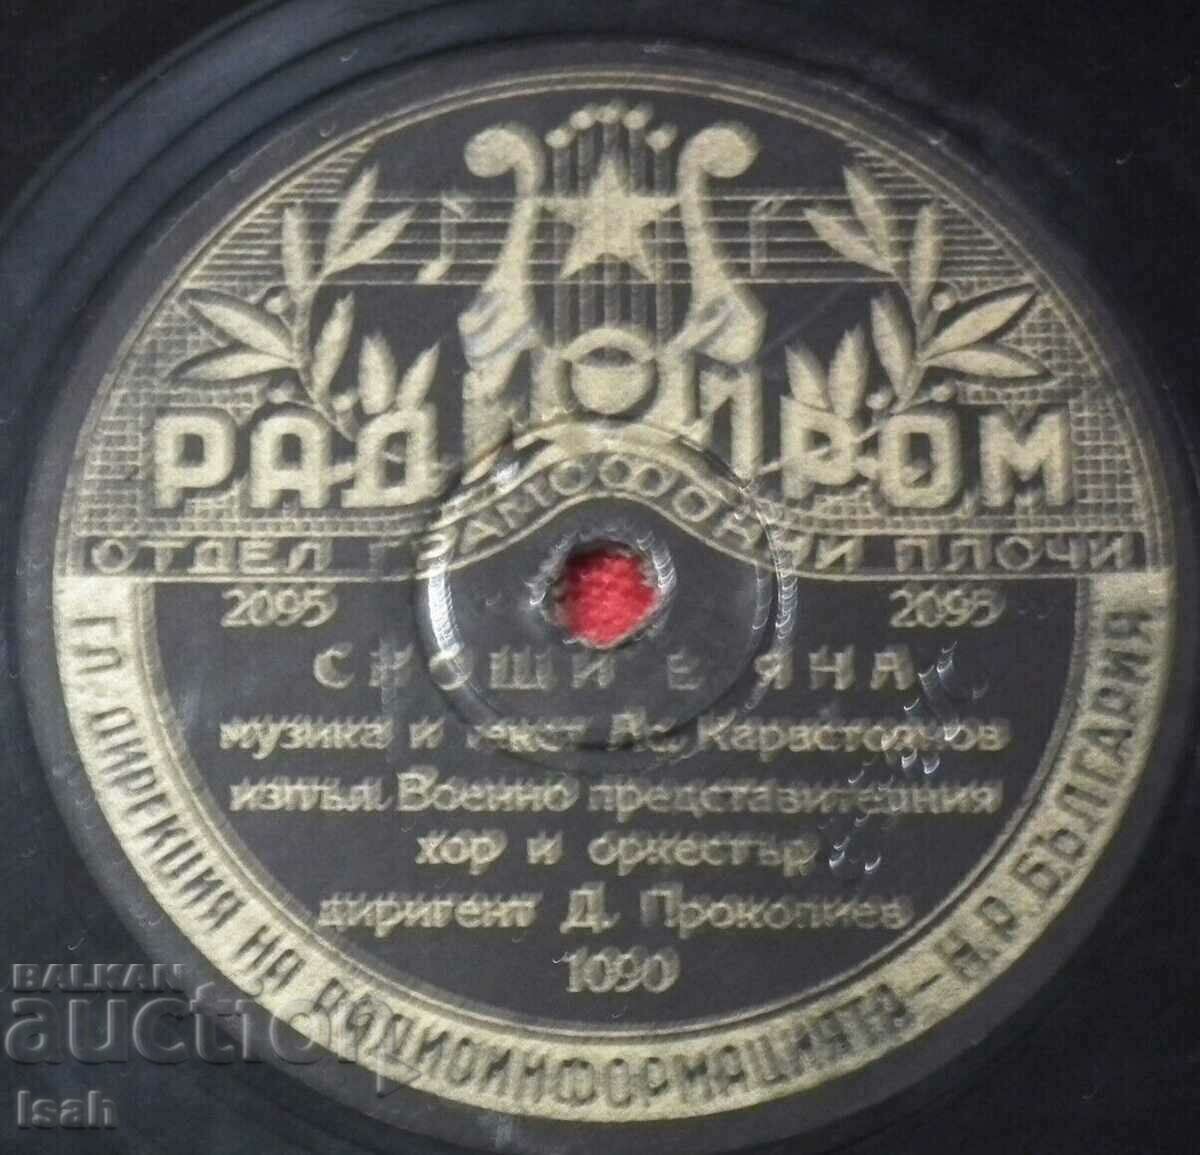 Bulgarian shellac record Karastoyanov Military Choir and Orchestra